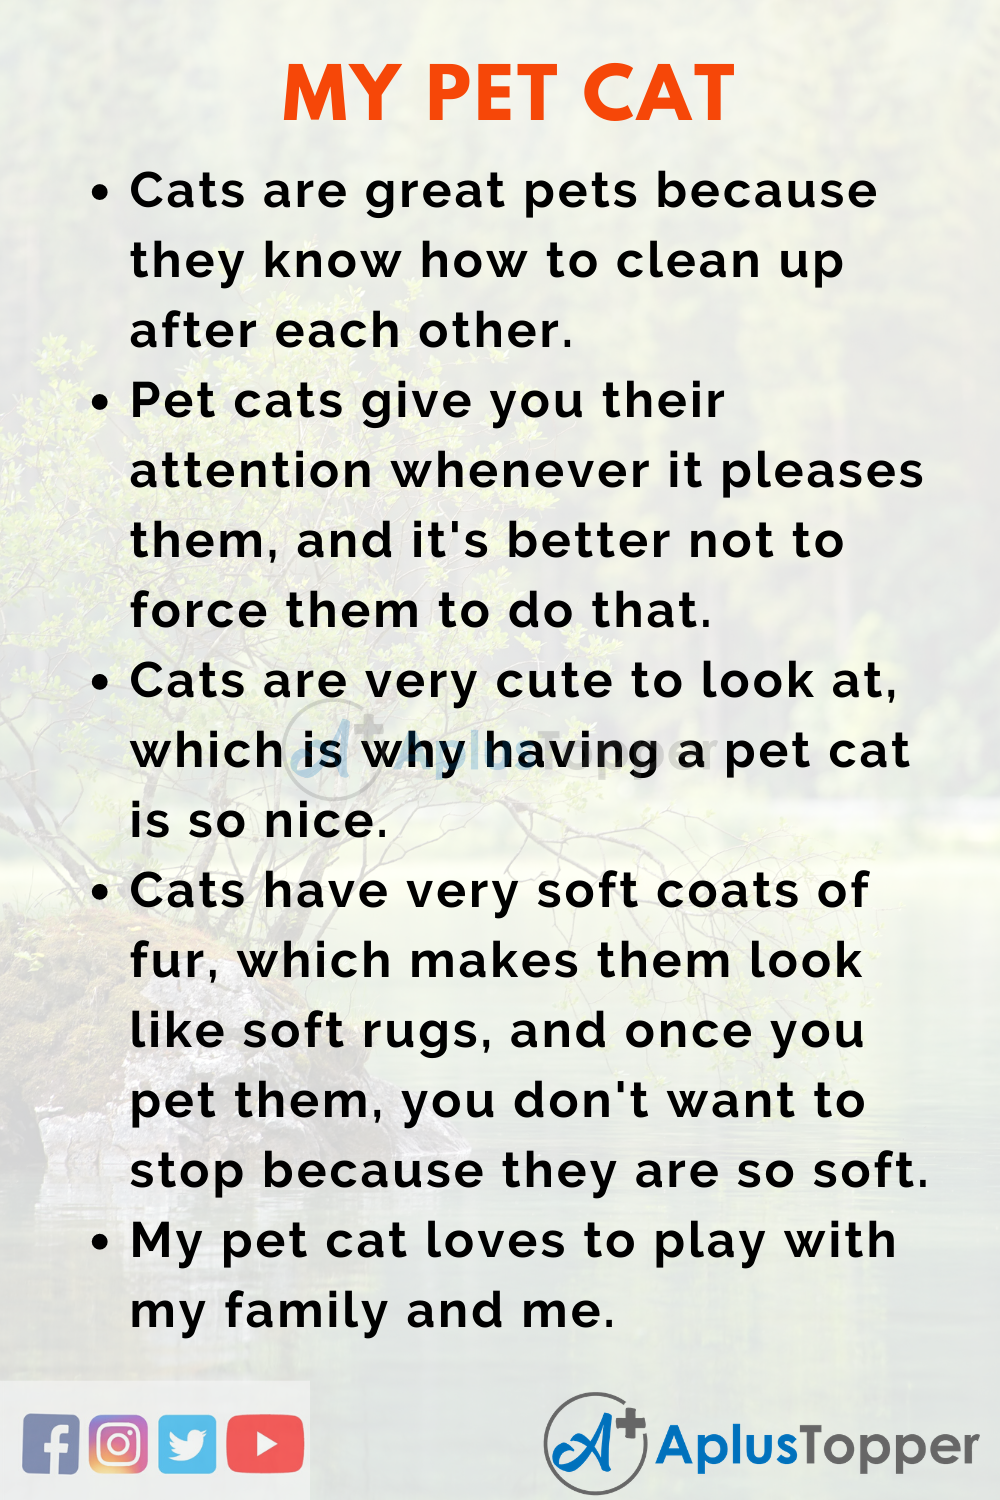 Essay on My Pet Cat